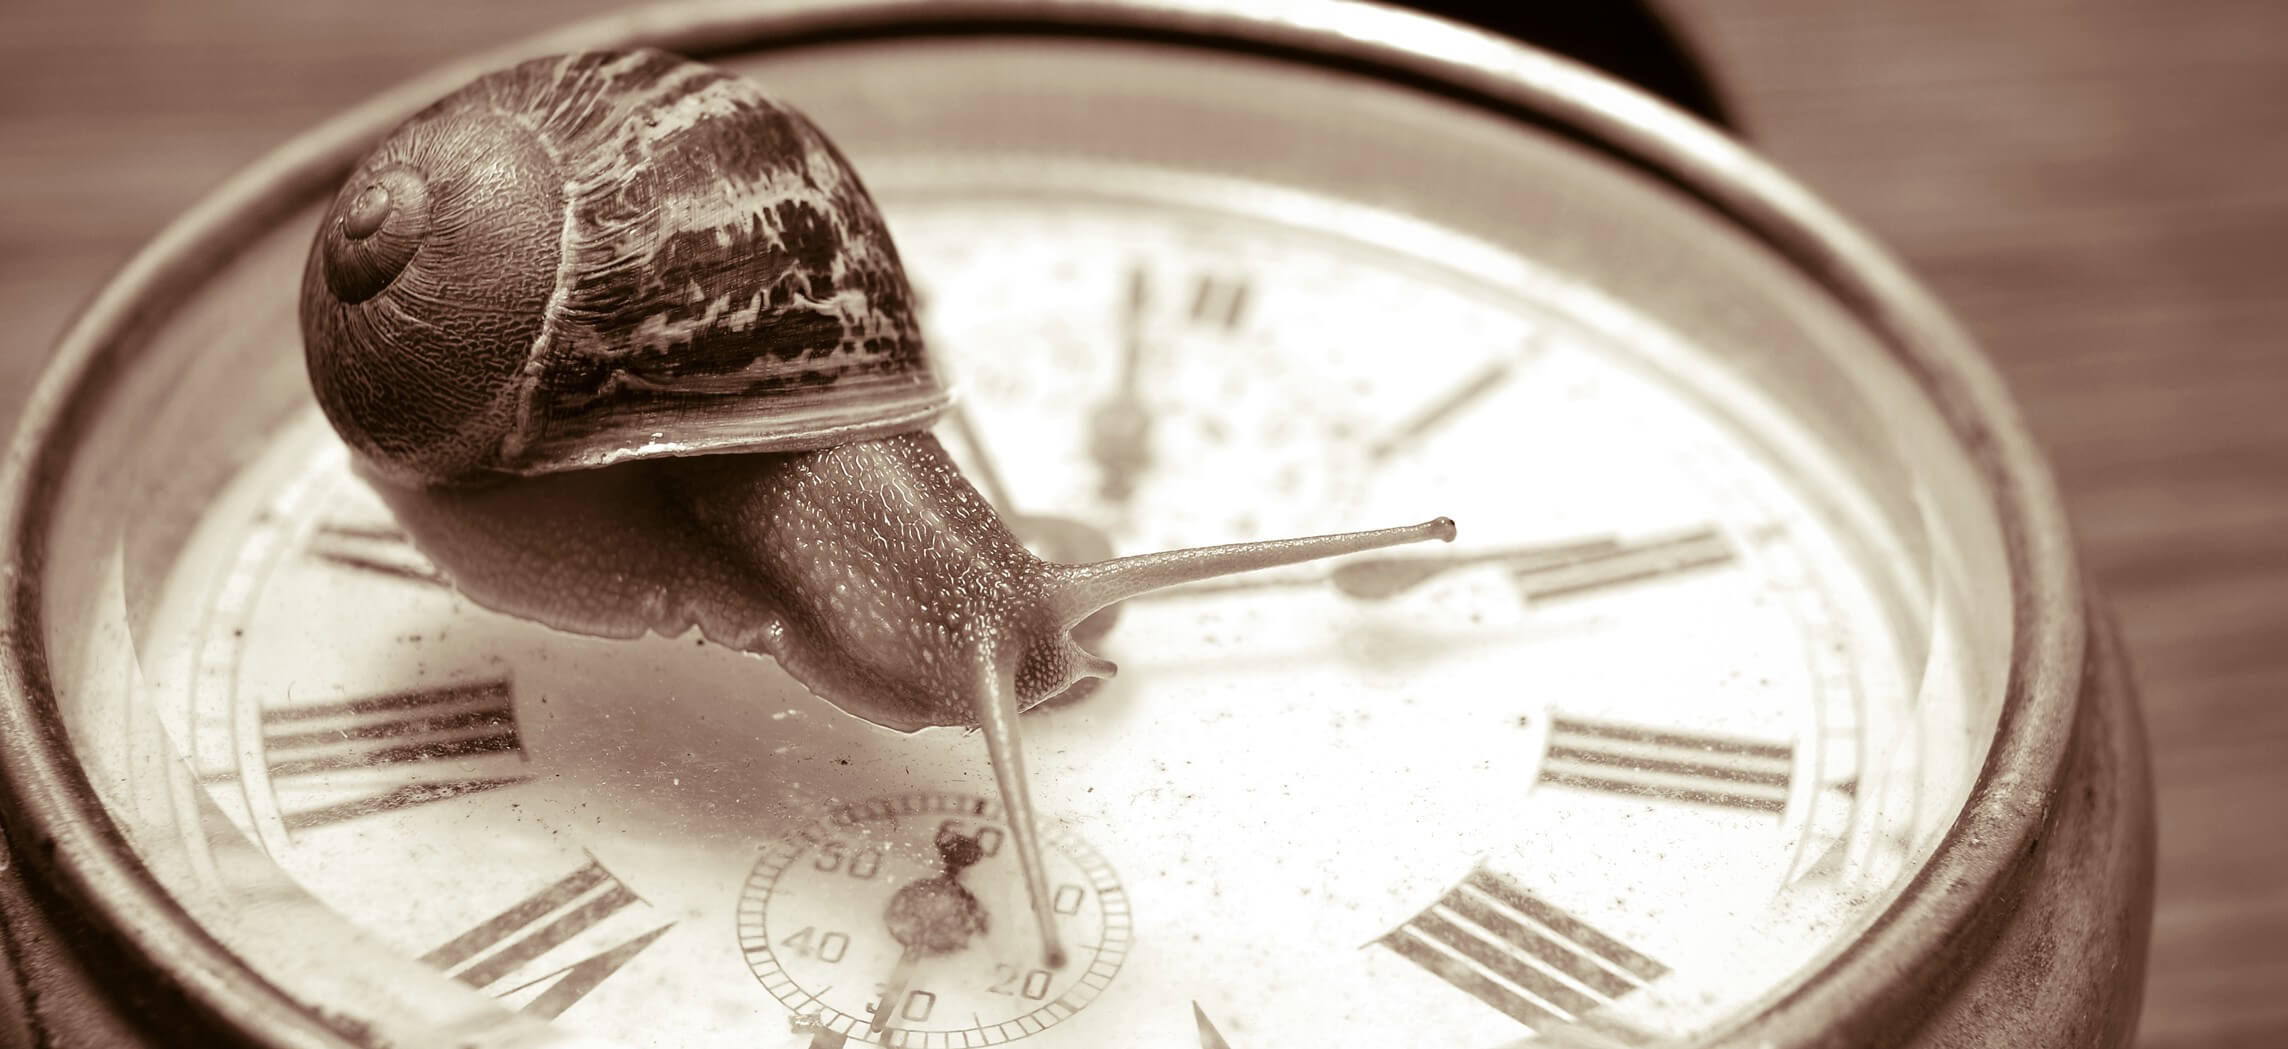 a snail on a clock